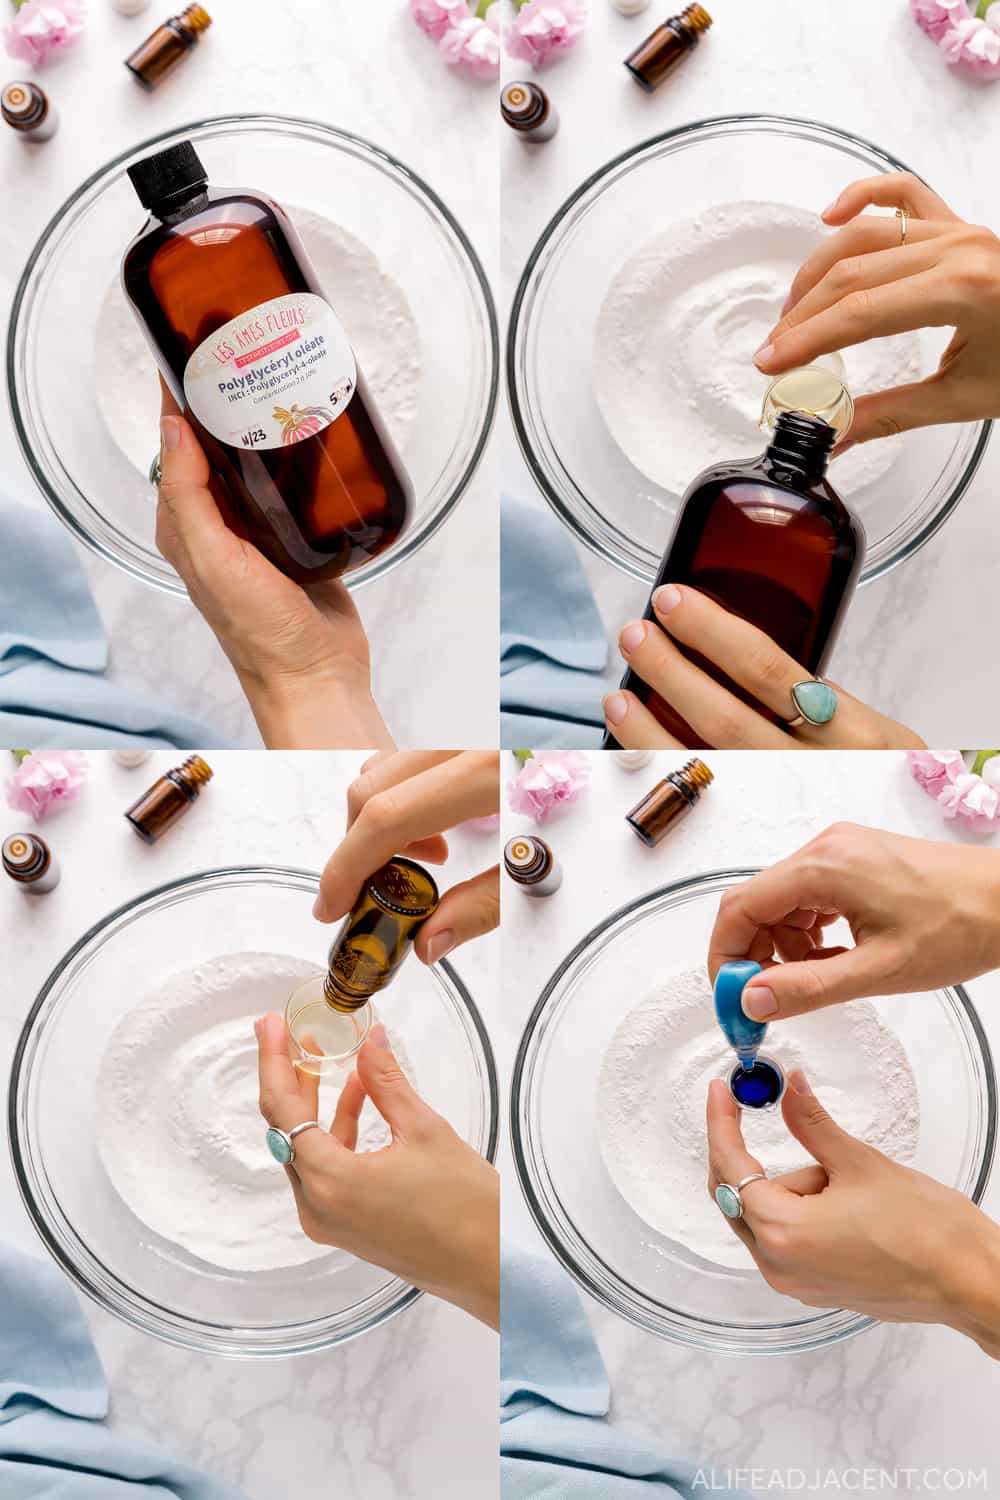 Liquid shower steamer ingredients: essential oils, natural emulsifier, castor oil, and colorant.